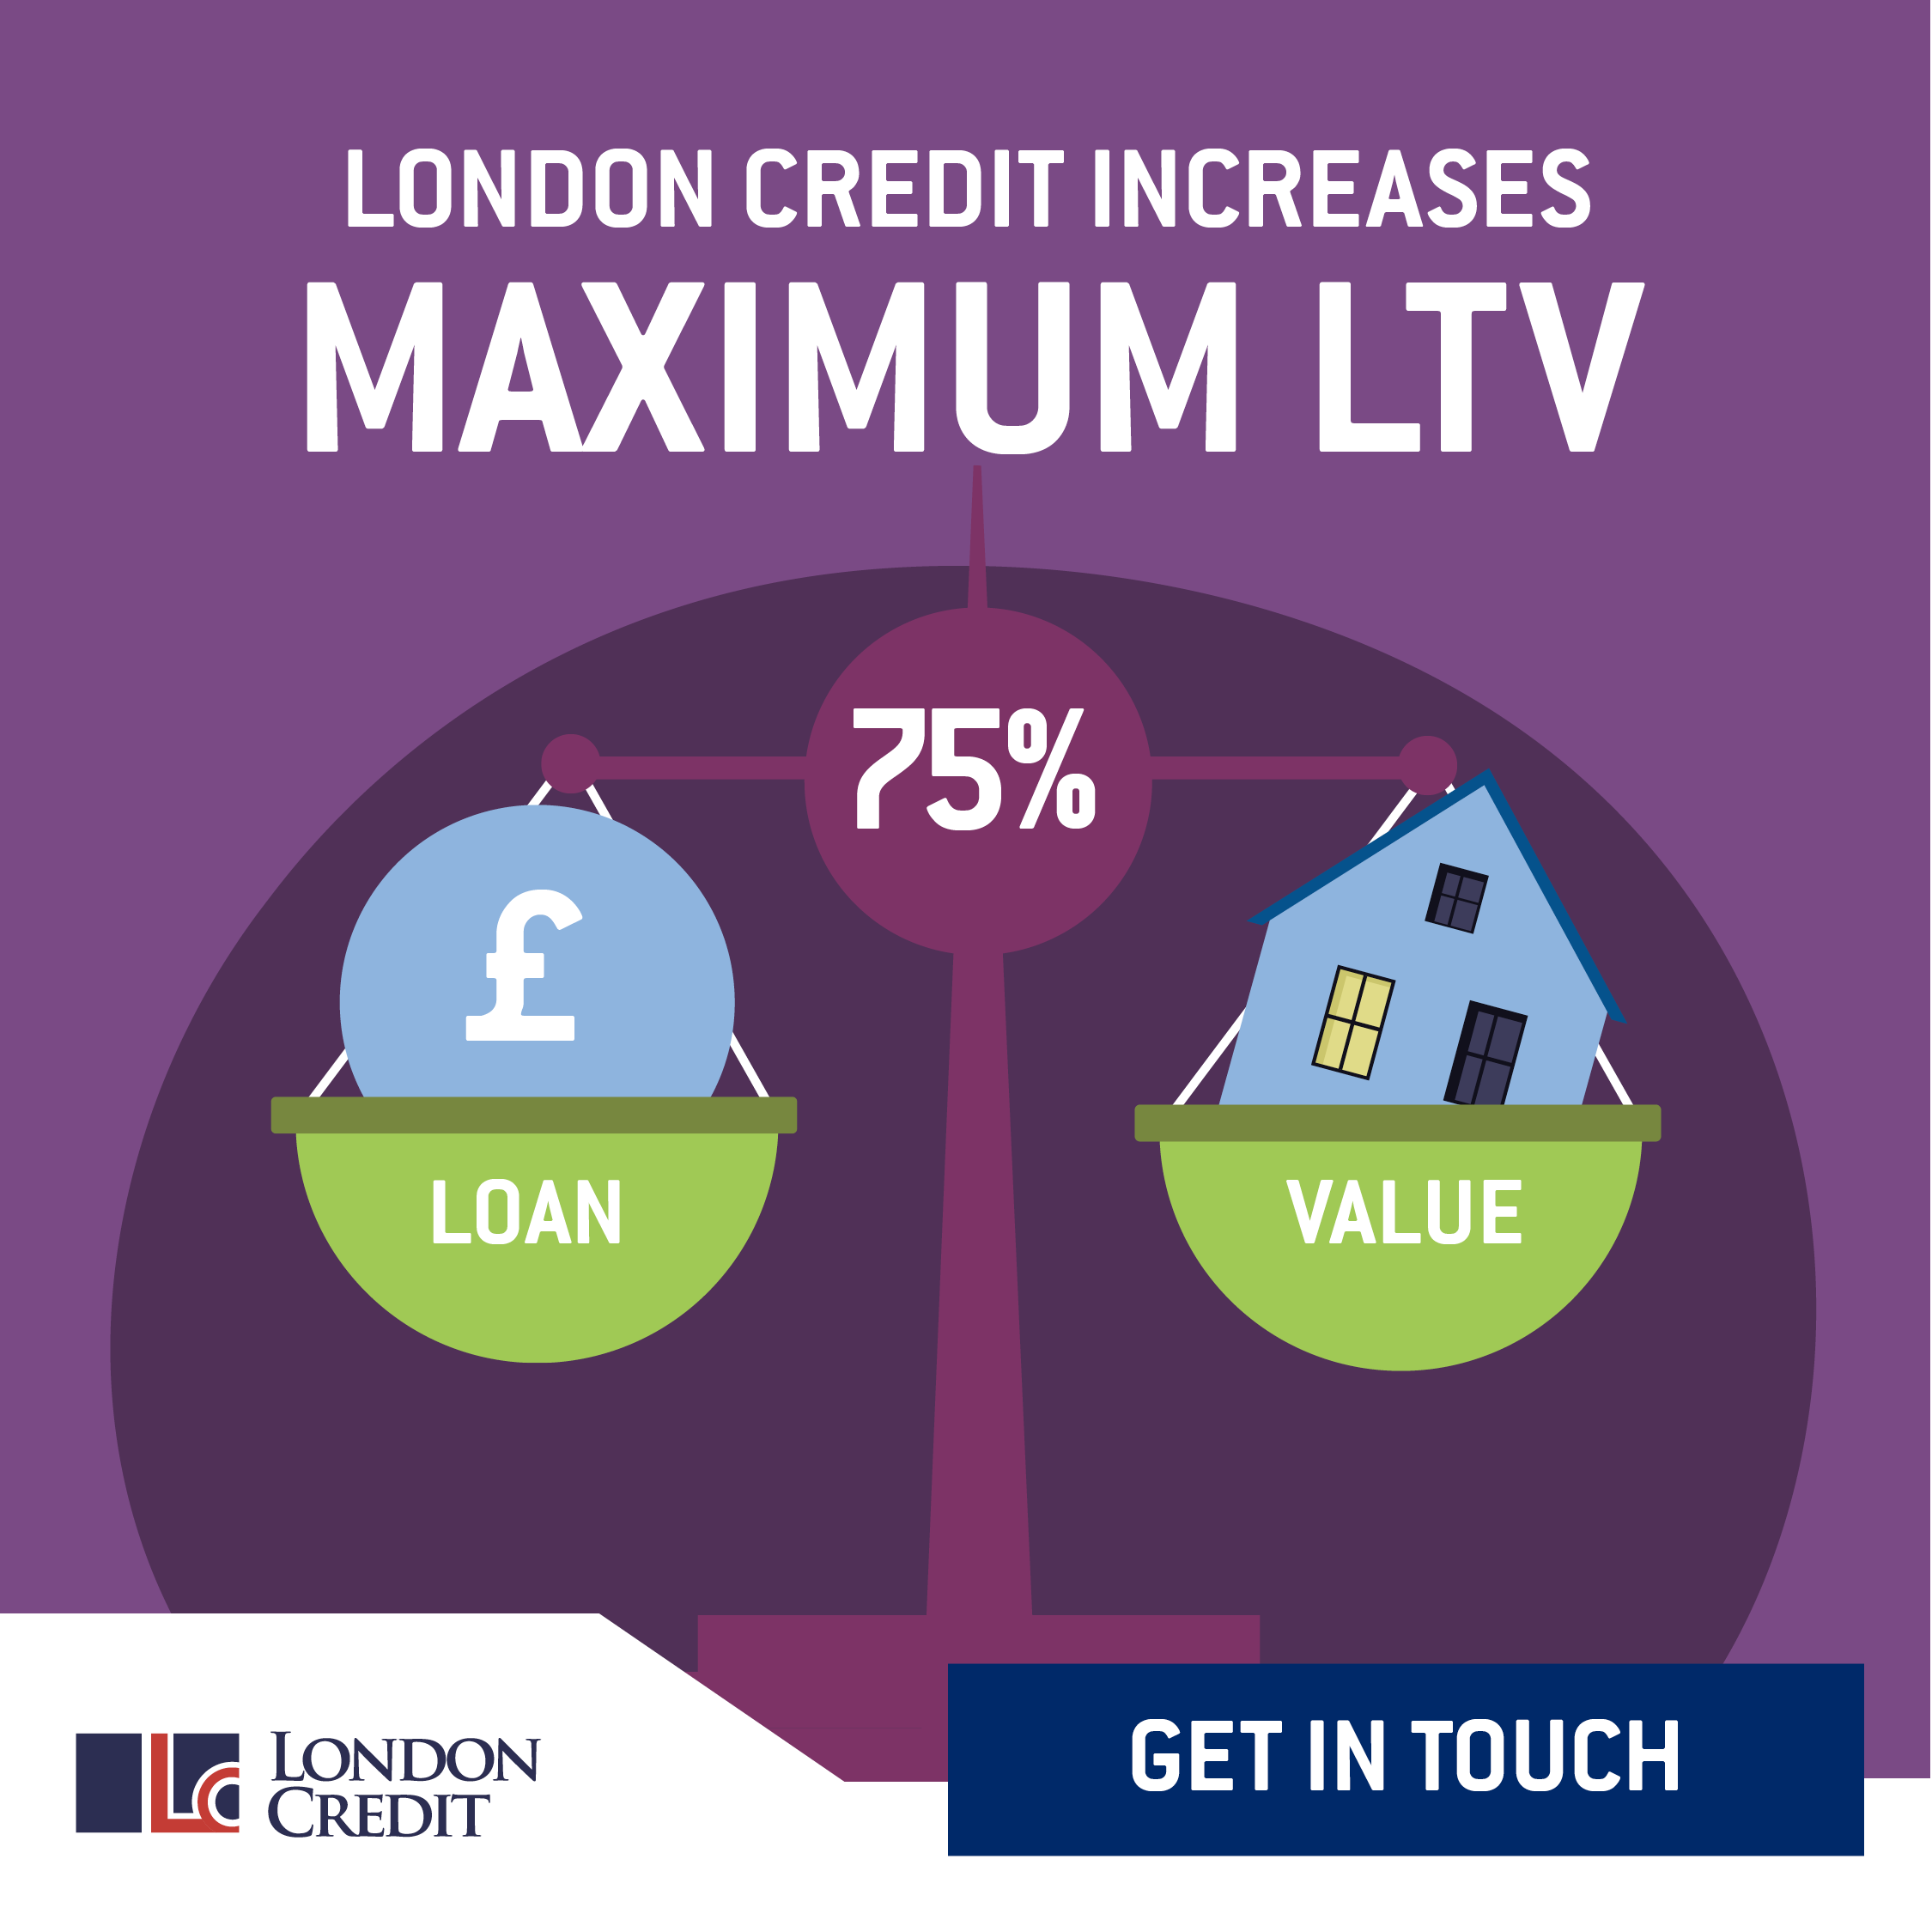 London Credit increases maximum LTV to 75%